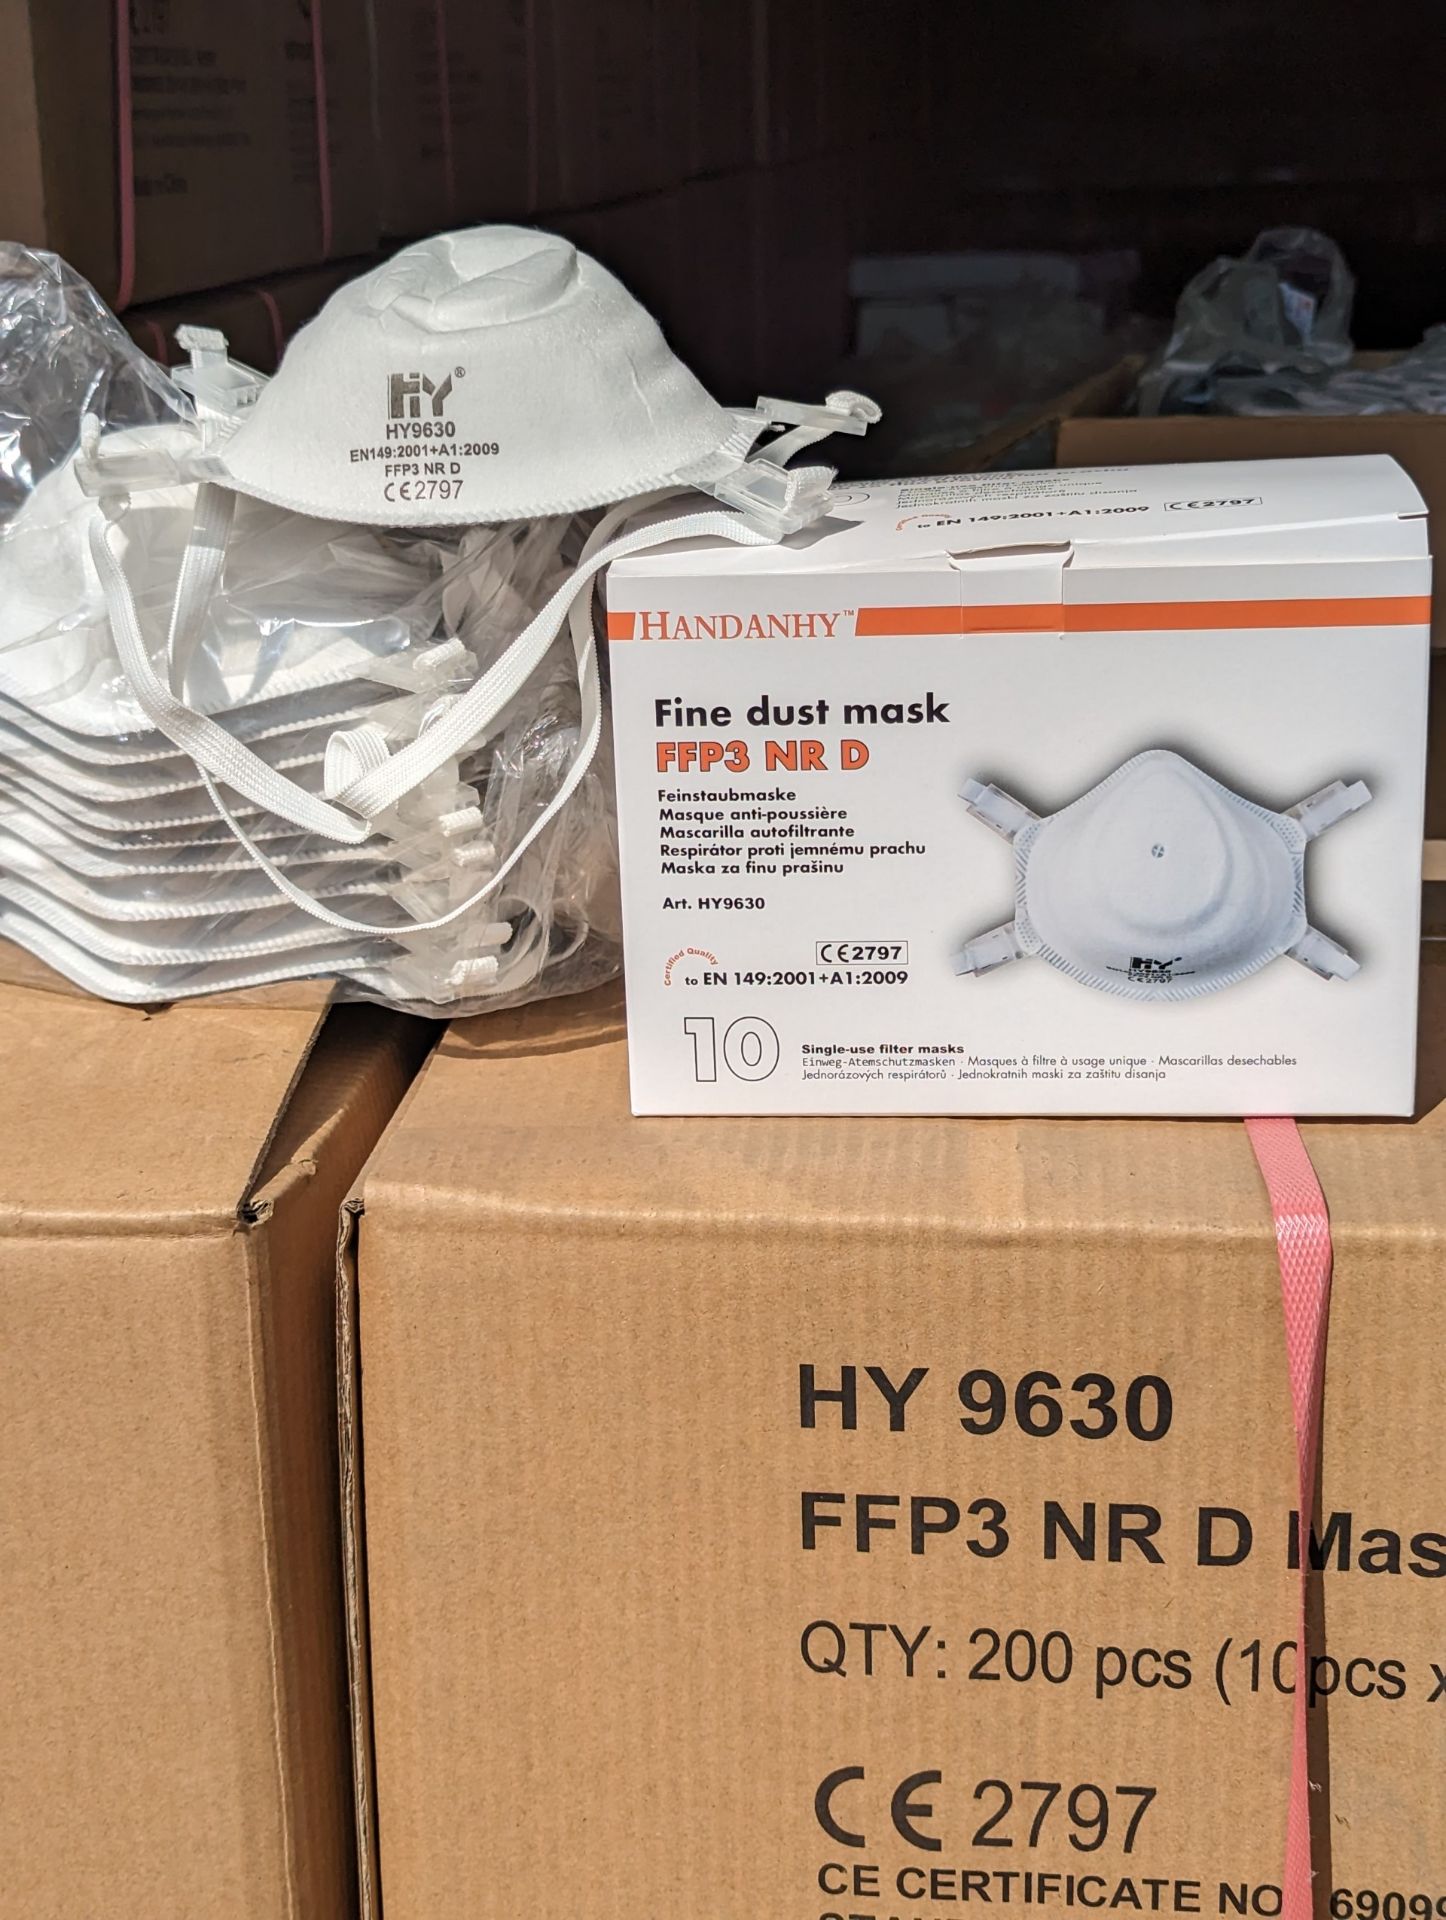 7 x Boxes Hy9630 FFP3 Protective Masks, 200 units per box. - Image 2 of 4